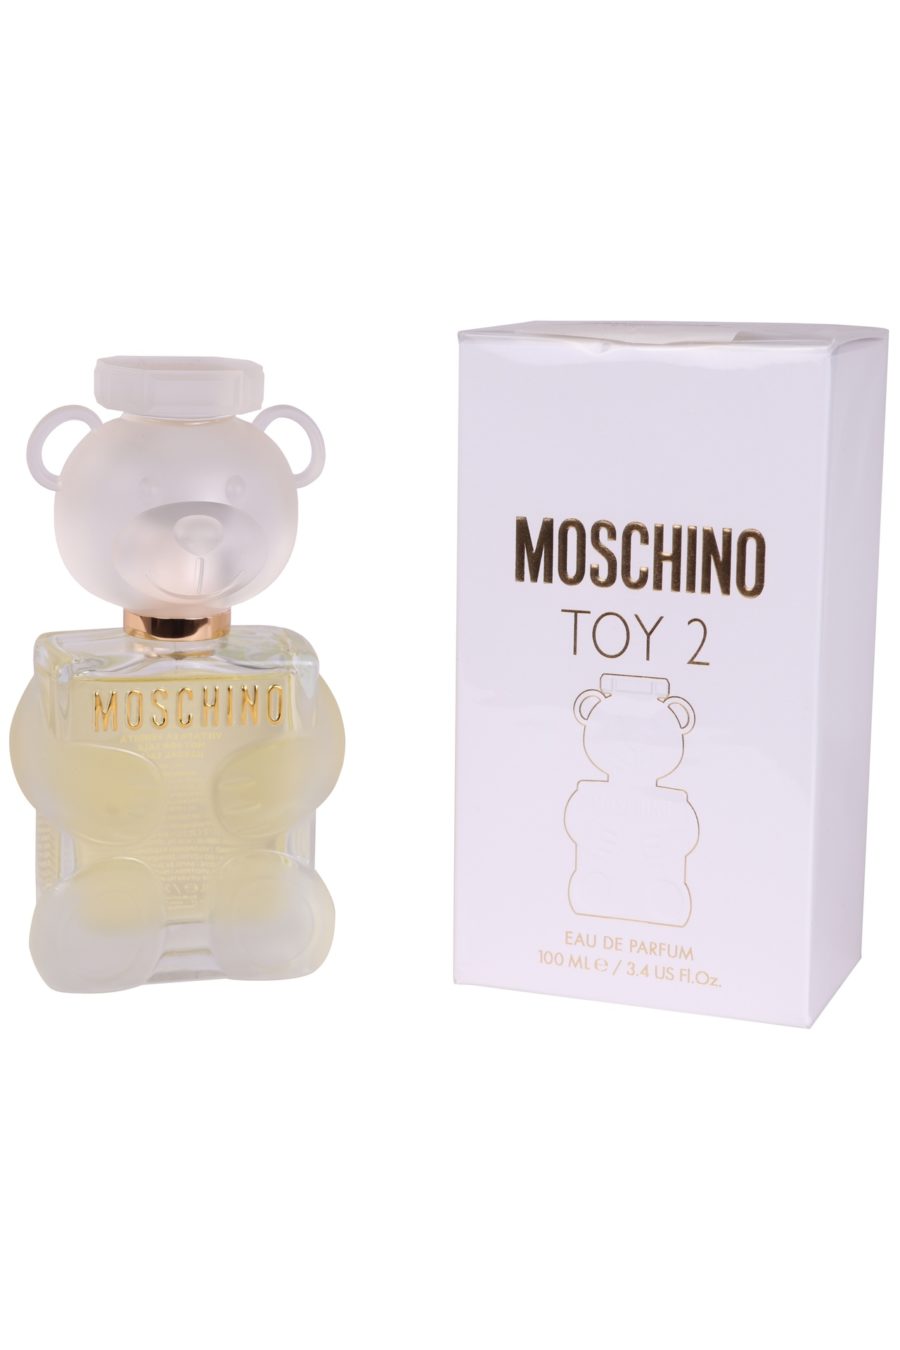 Perfume Moschino Toy 2 100 ml - e3d70ed752b571903737fd1862bd4df4873b6843c3